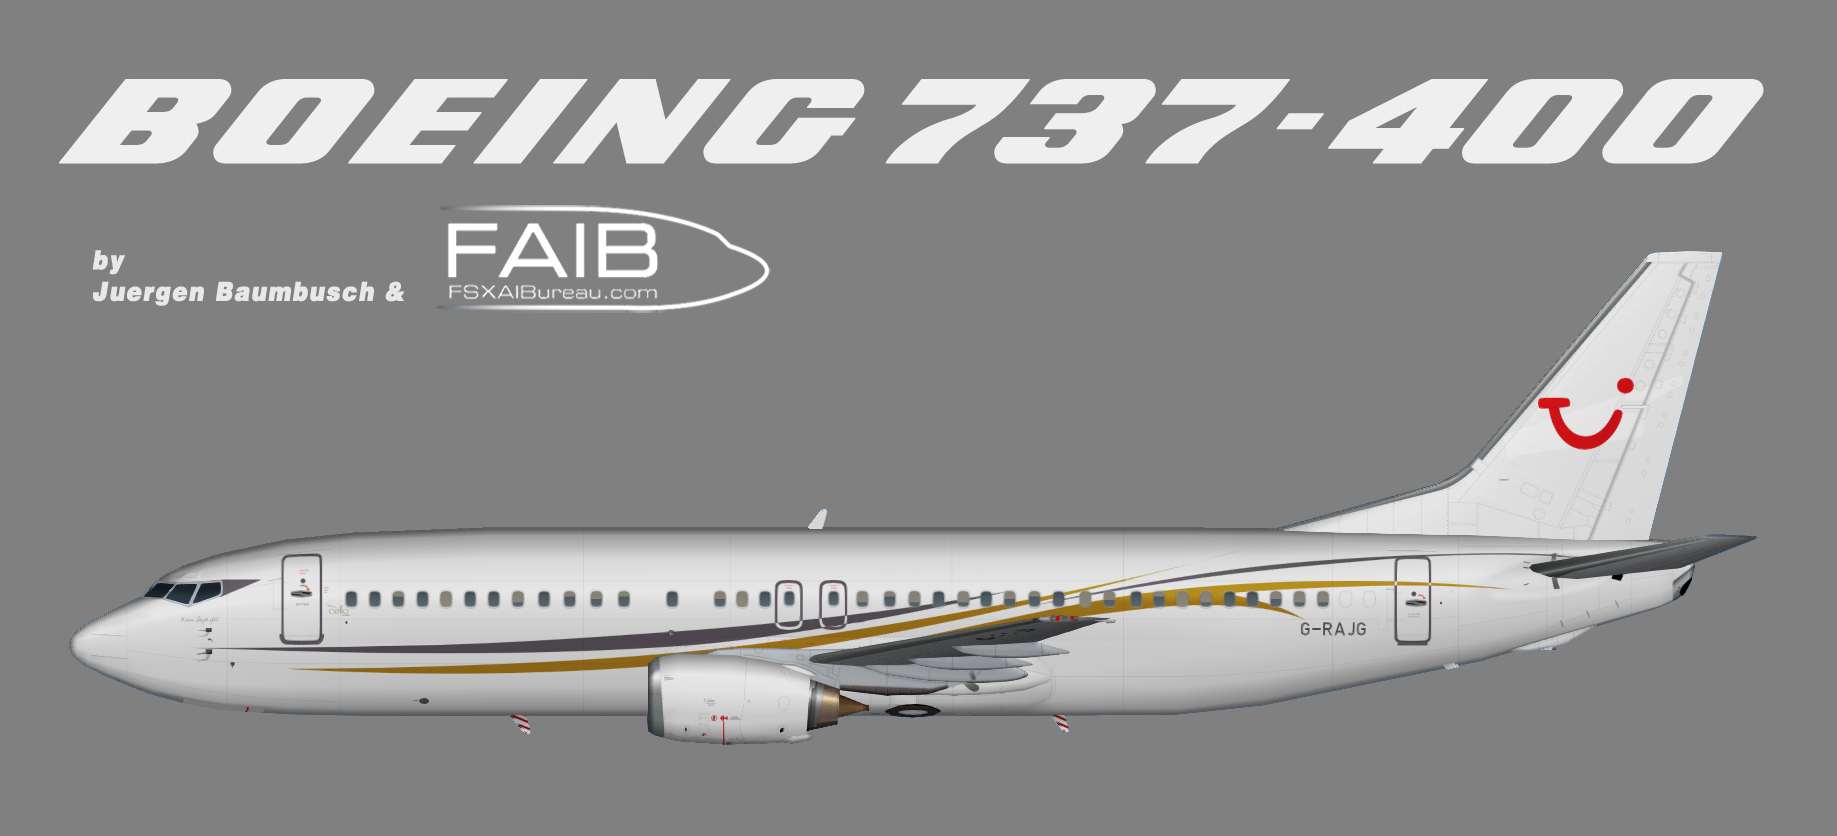 Cello Aviation Boeing 737-400